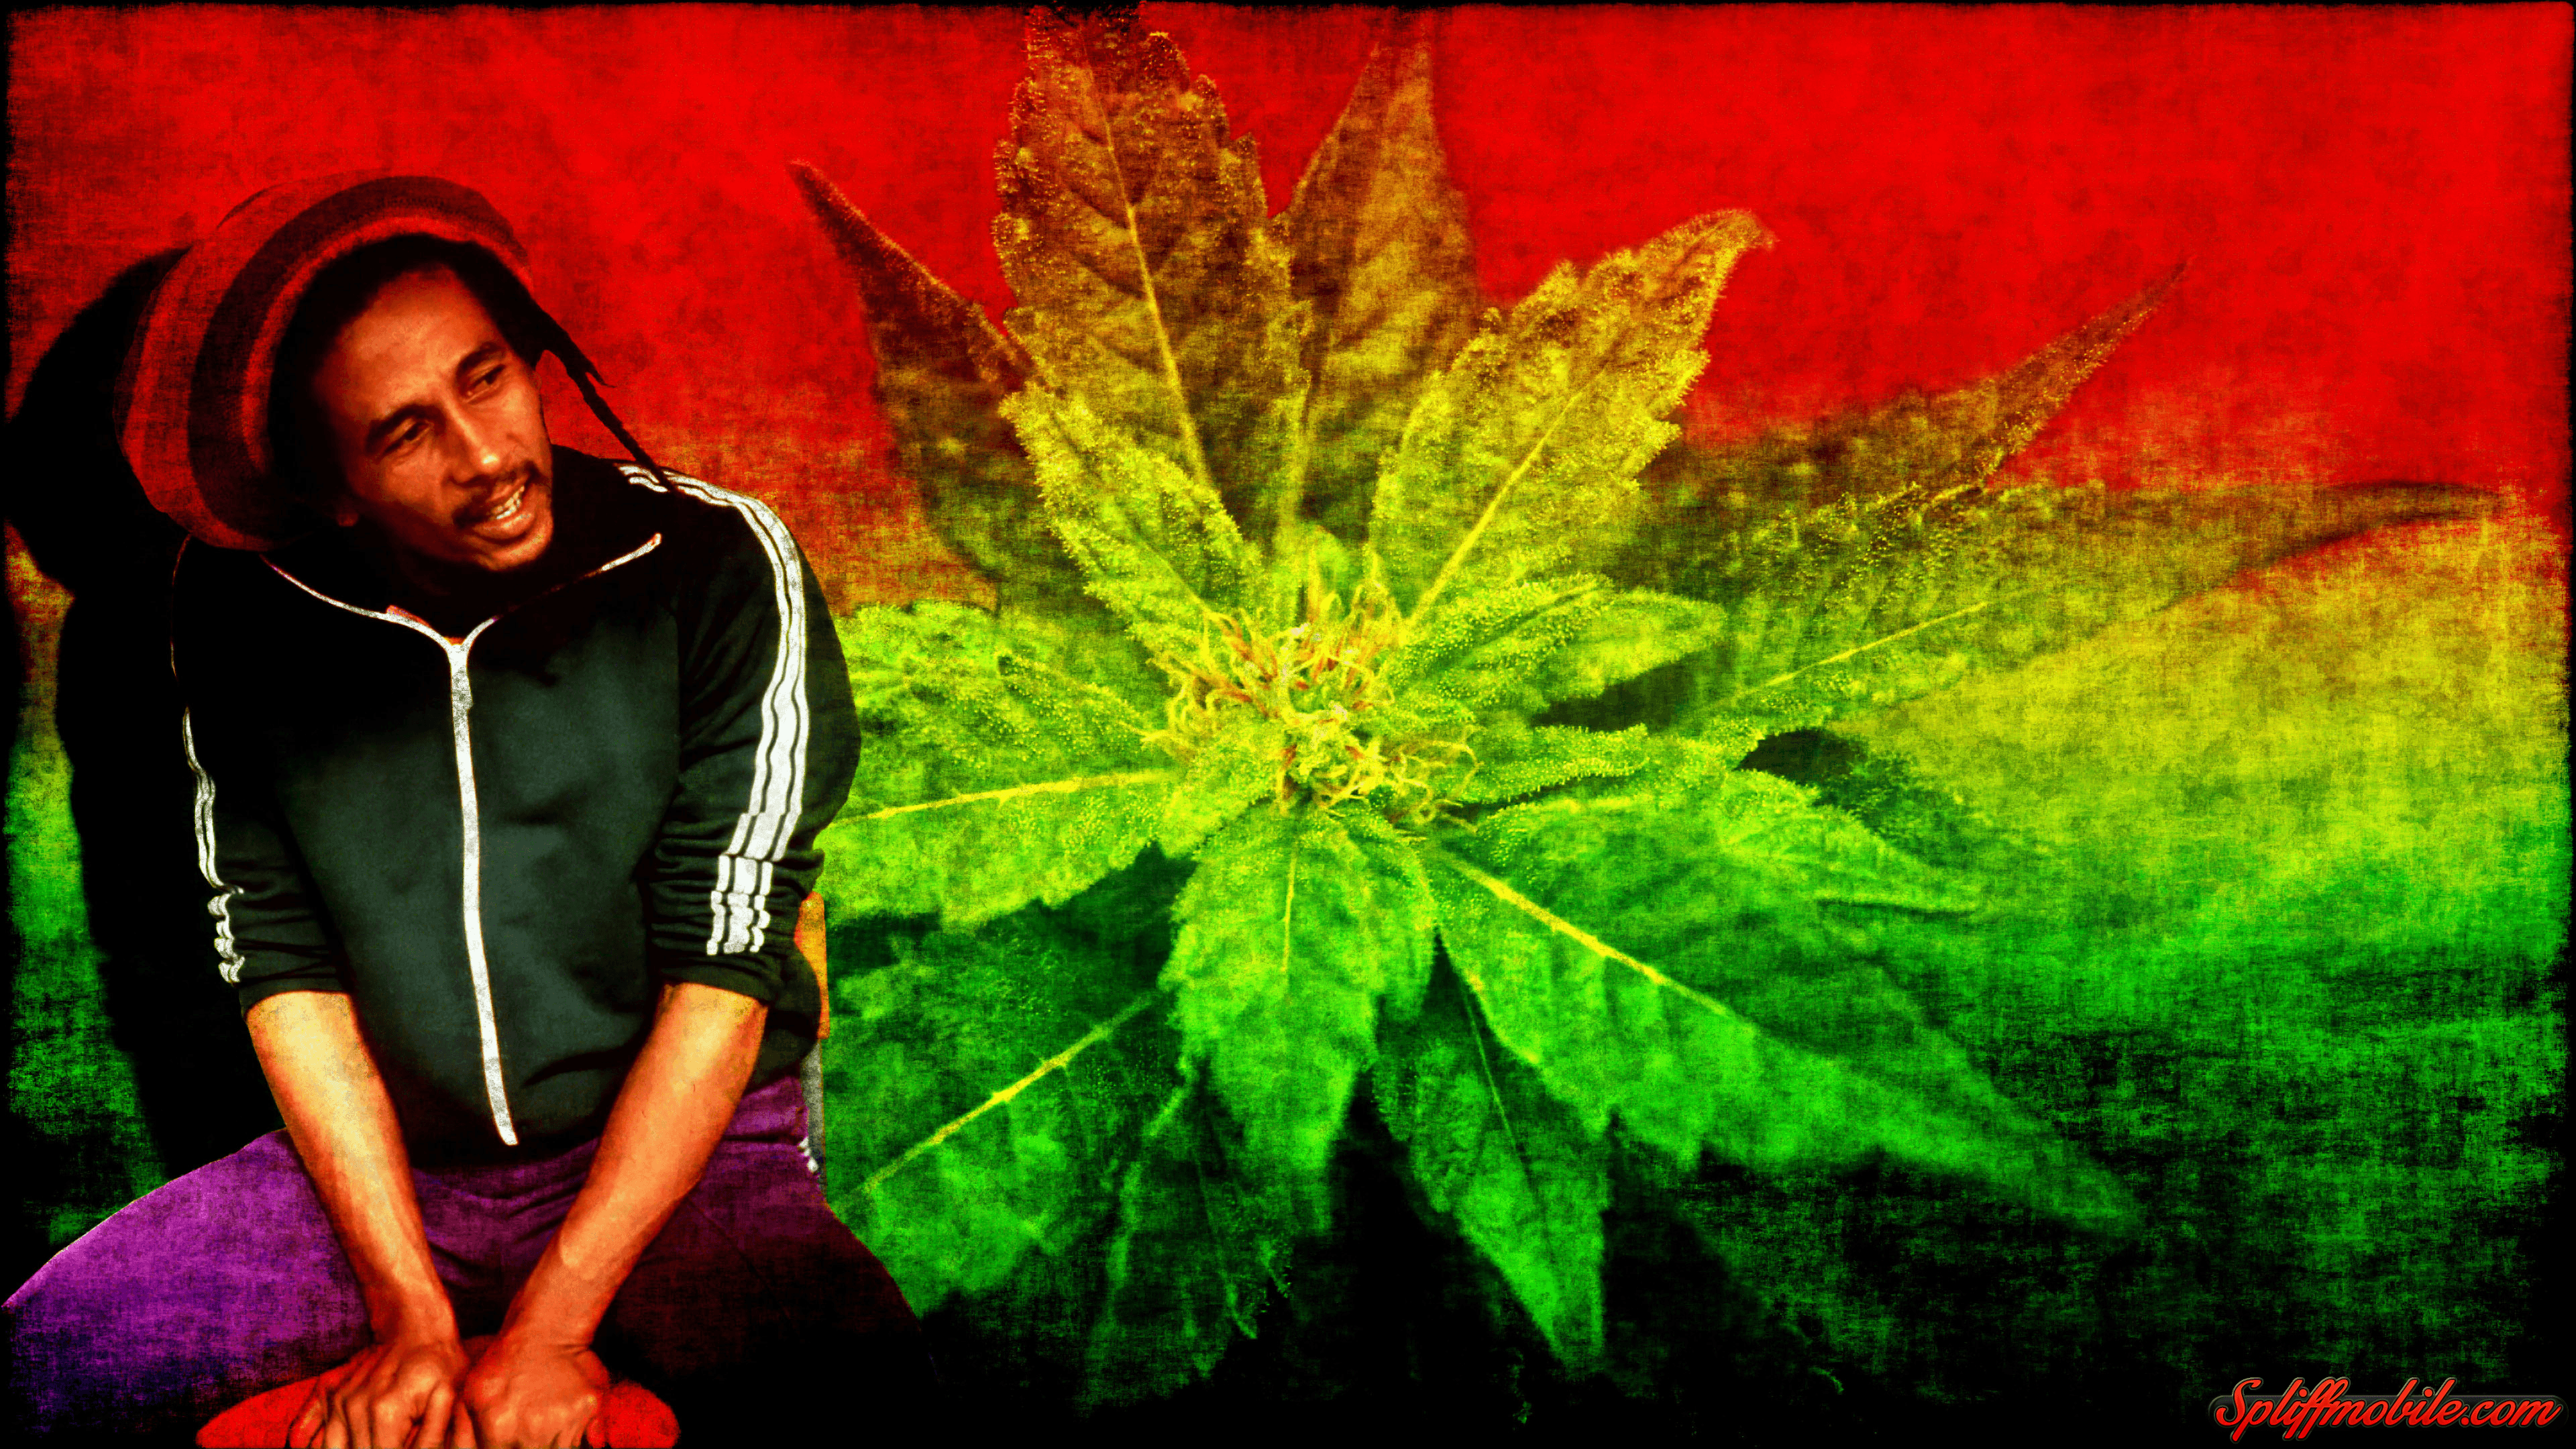 Bob Marley Wallpaper Picture Image. HD Wallpaper